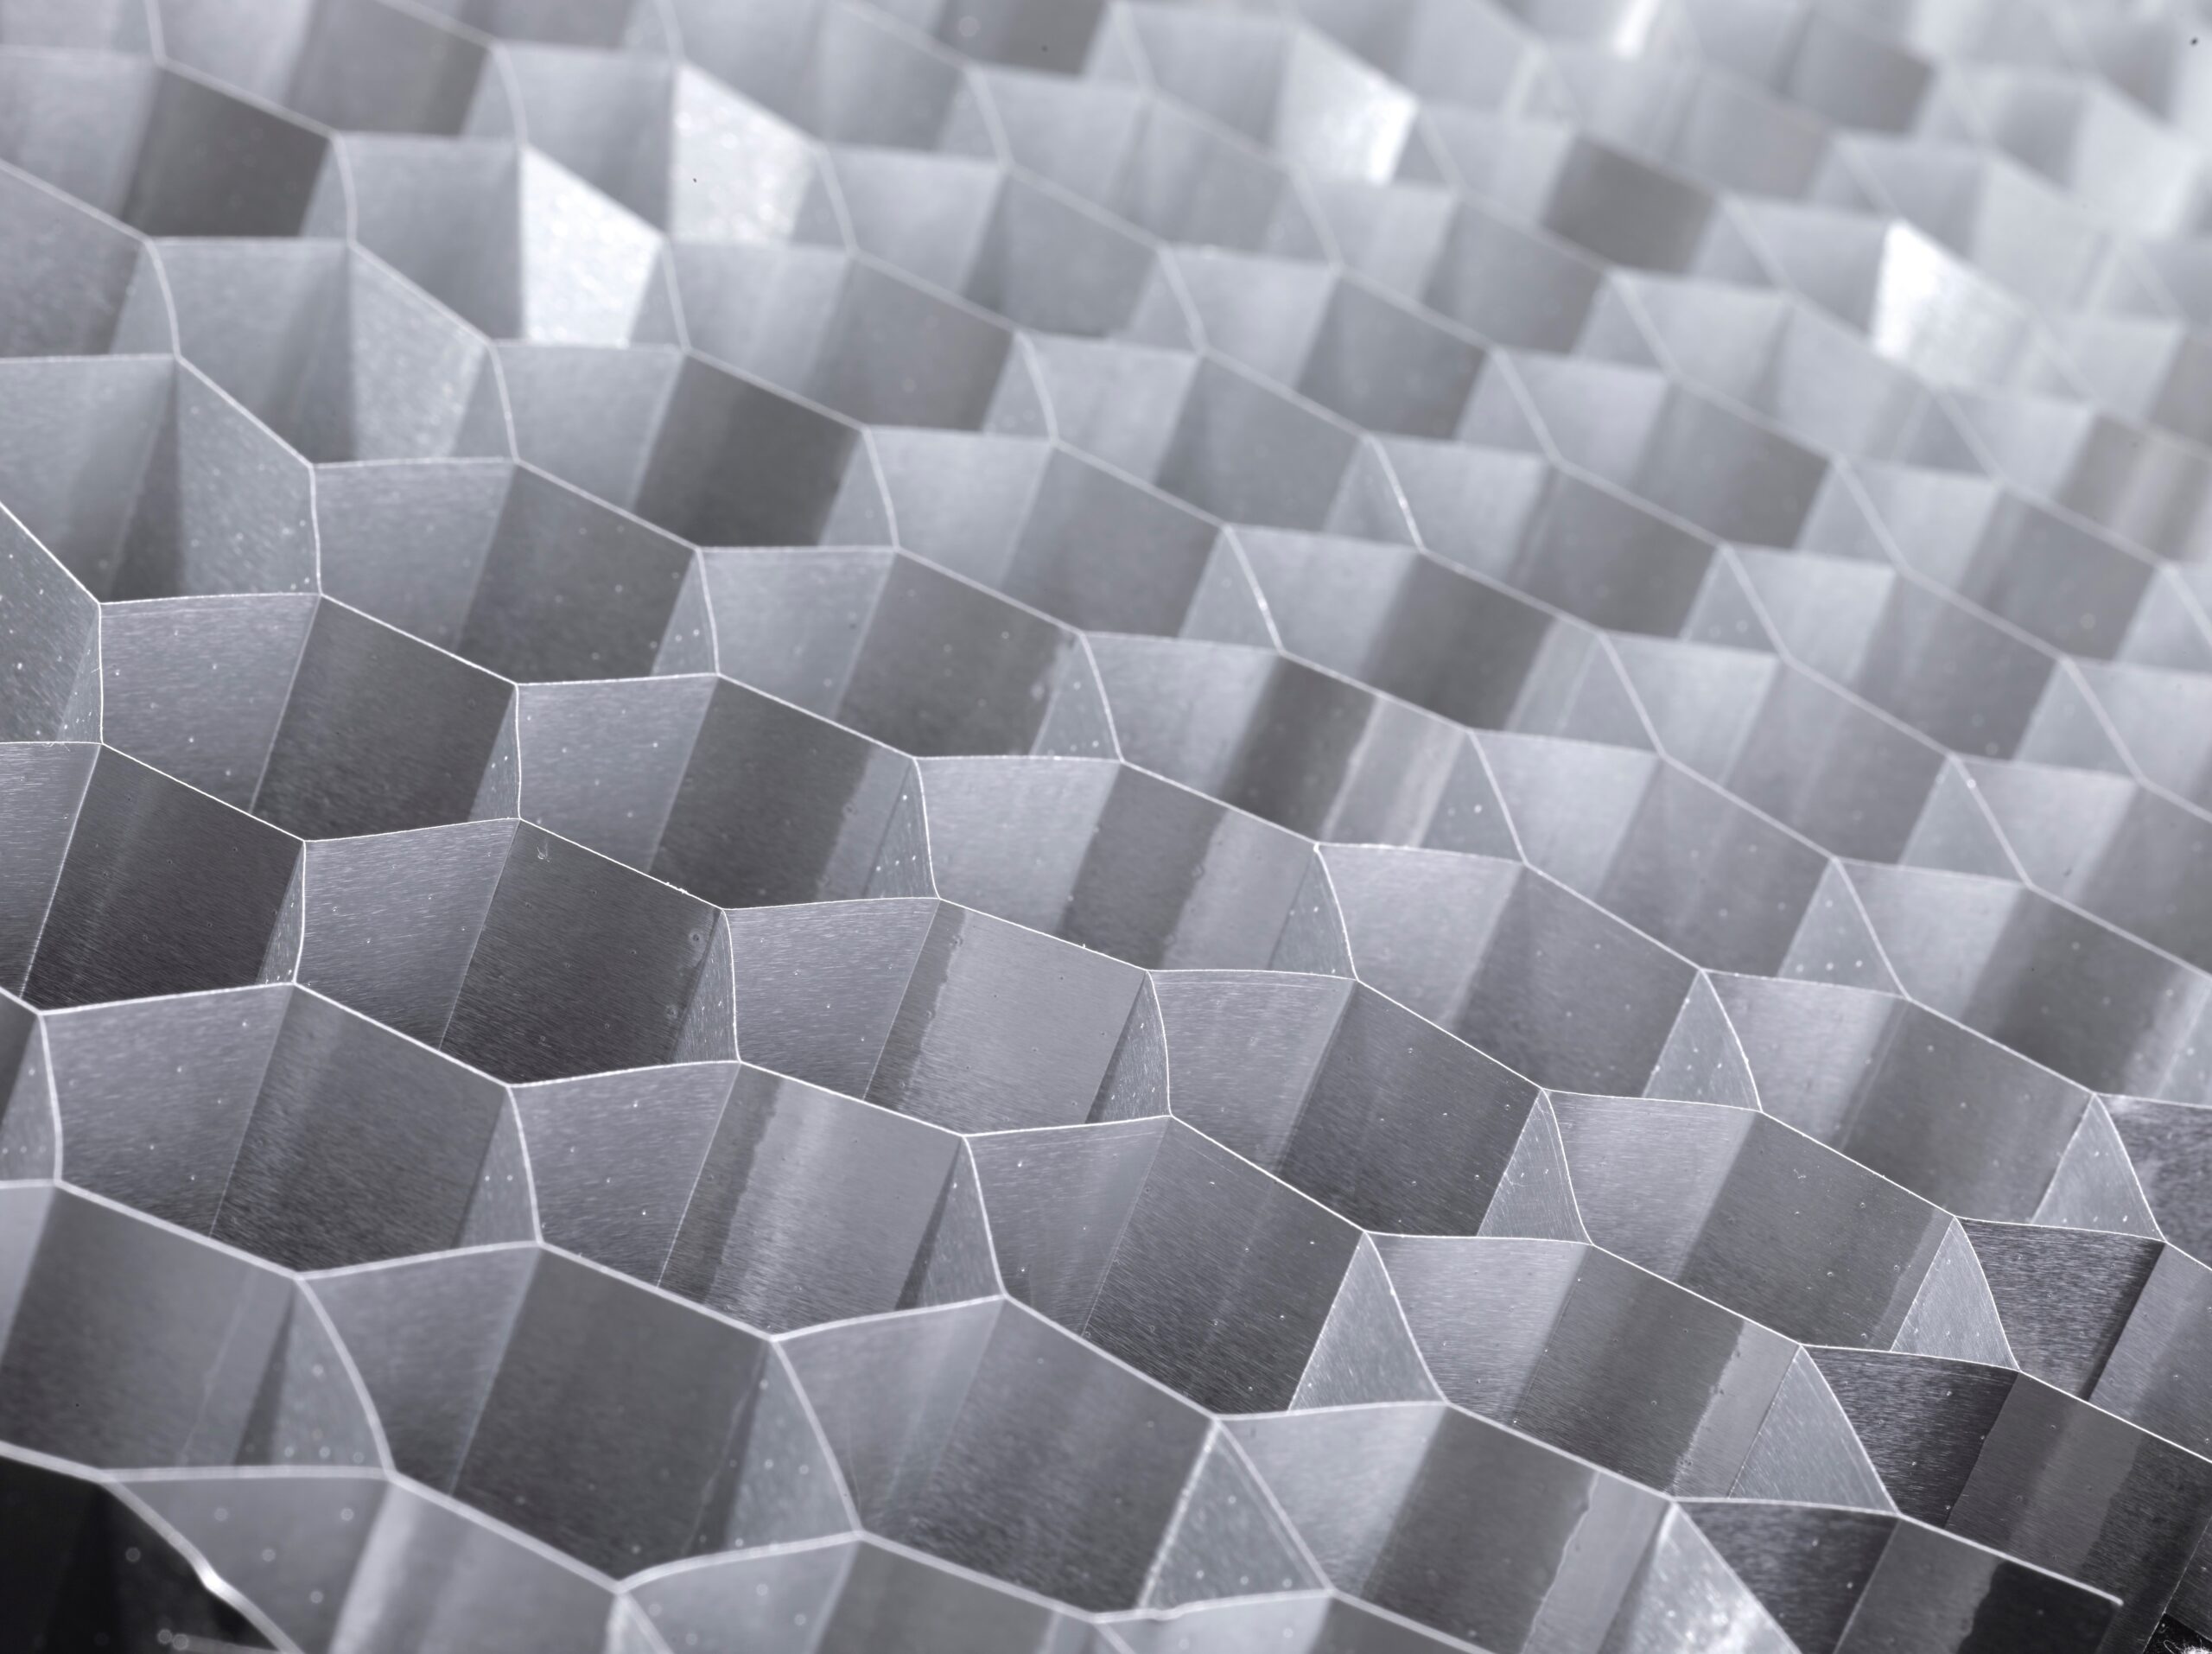 Corex aluminium honeycomb